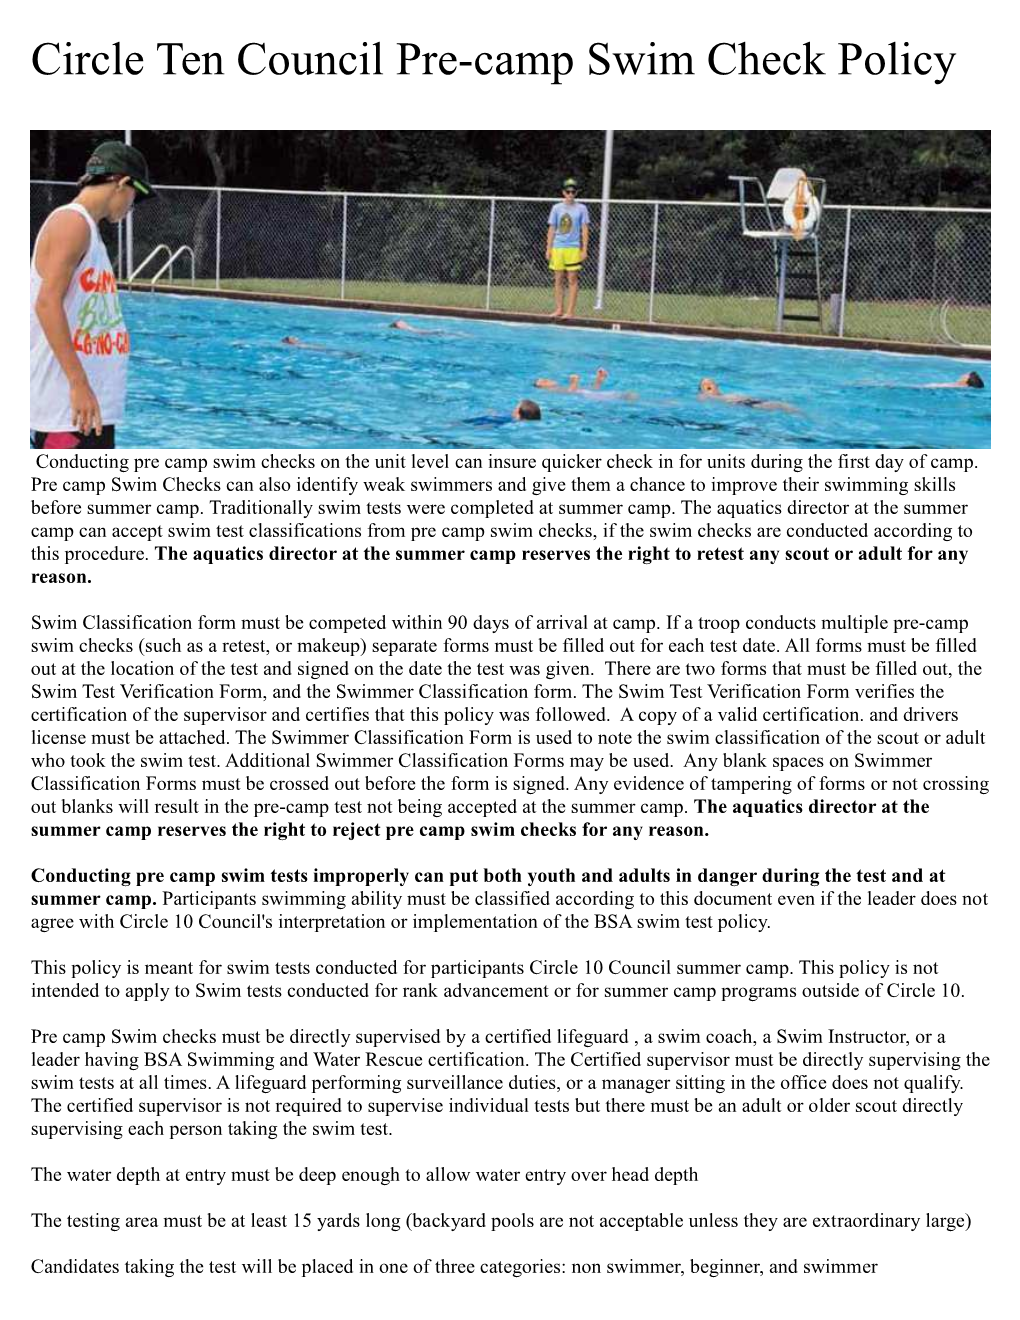 Circle Ten Council Pre-Camp Swim Check Policy